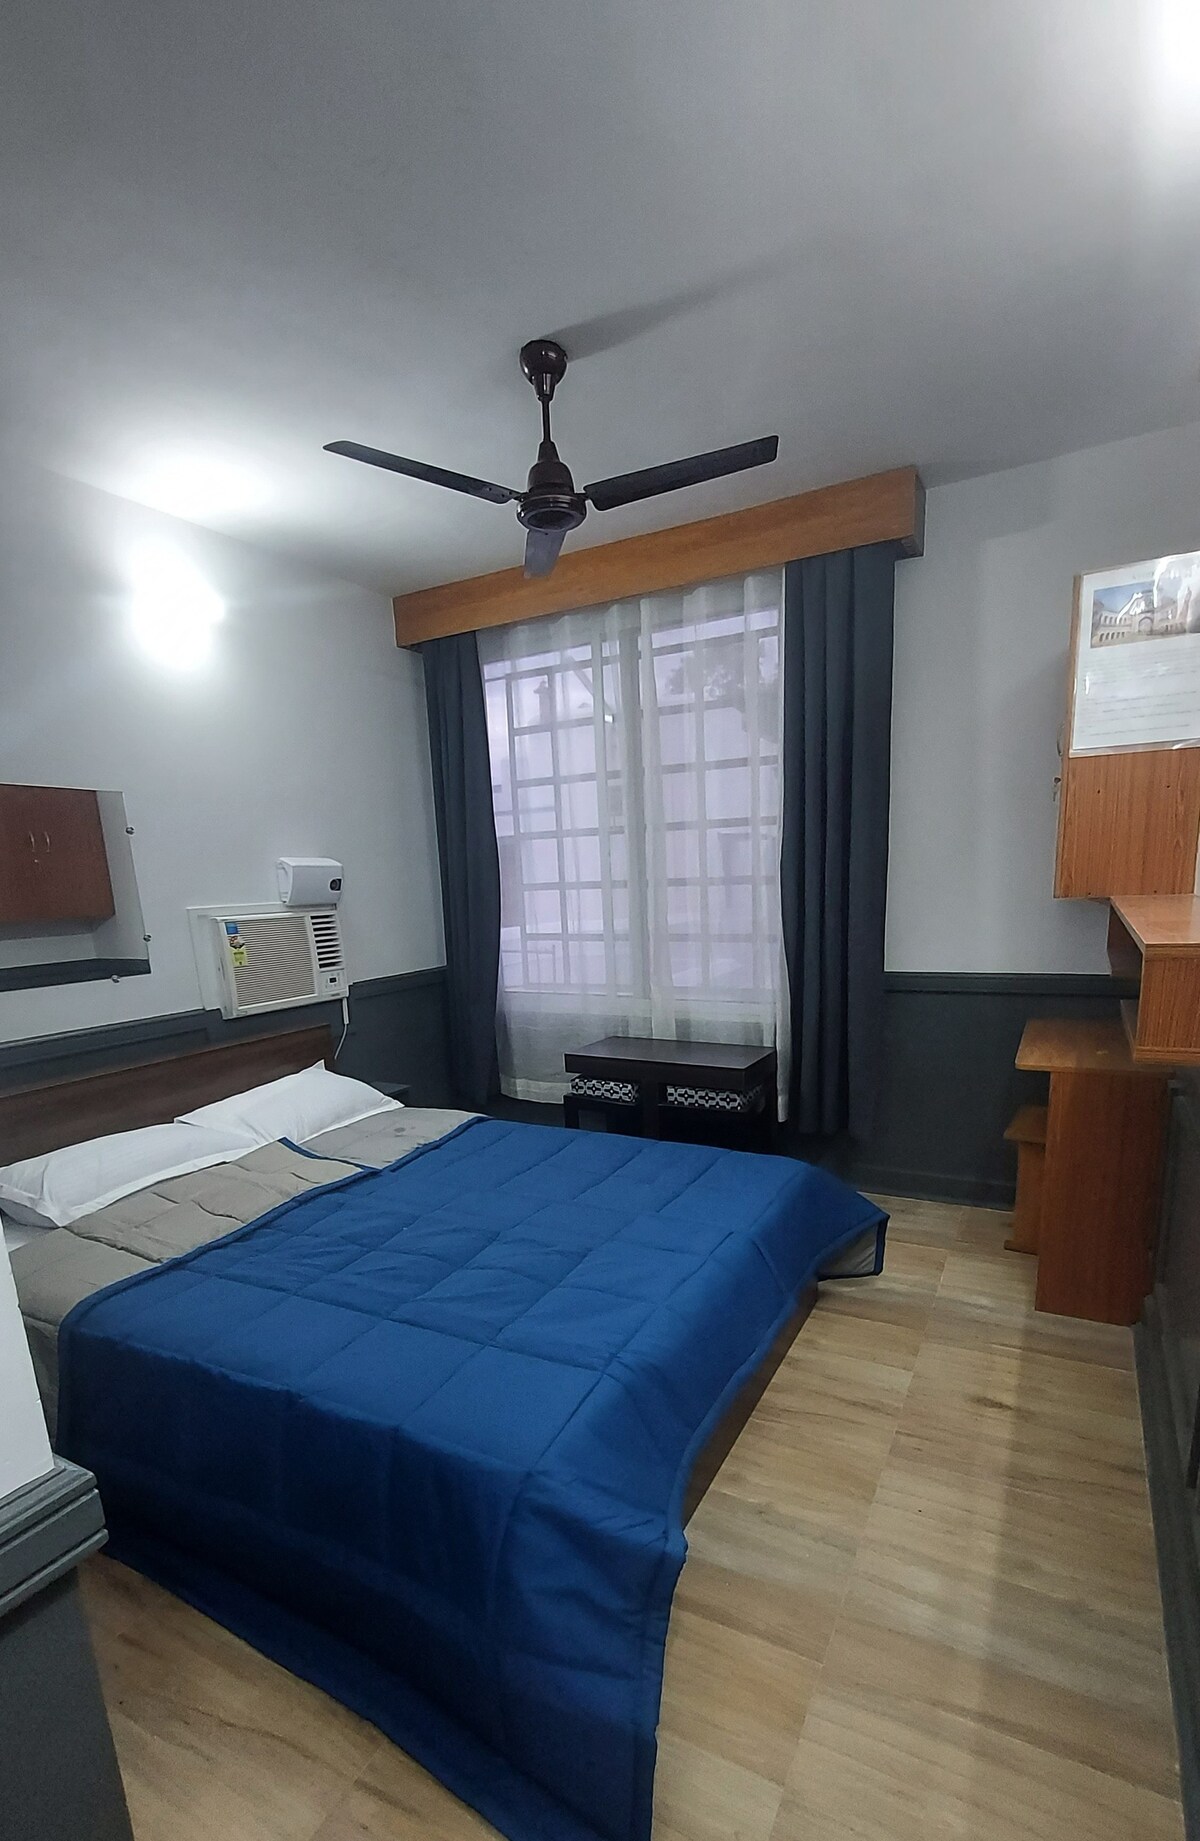 Dwaraka - 2 Bed Room Flat (7 people)